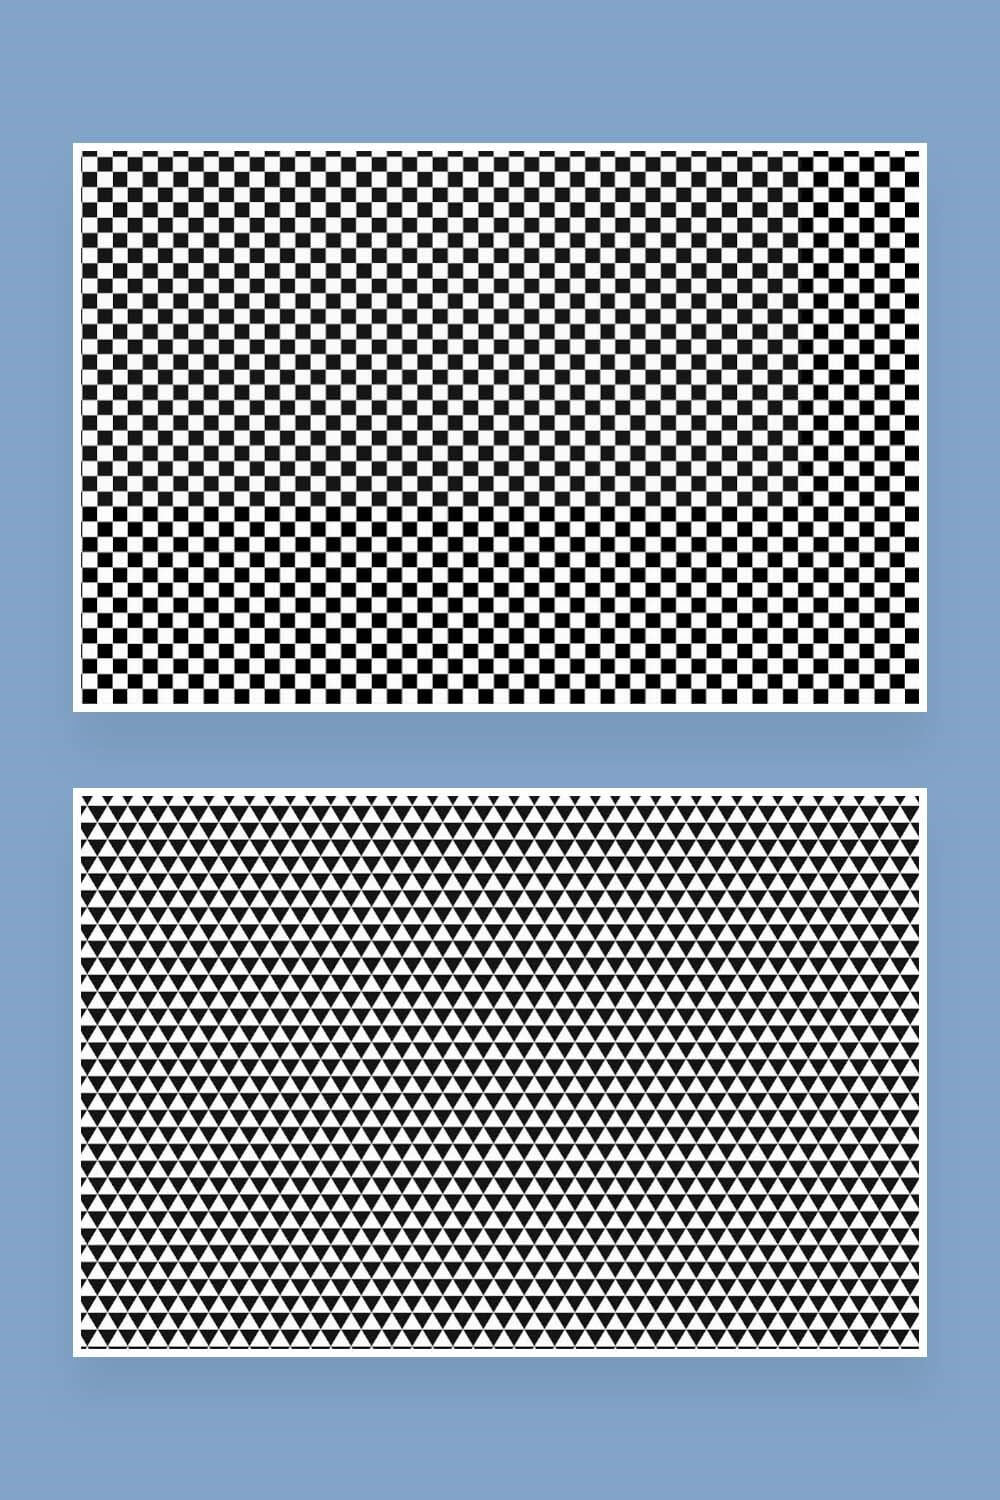 Small chessboard and triangular pattern seamless geometric pattern.